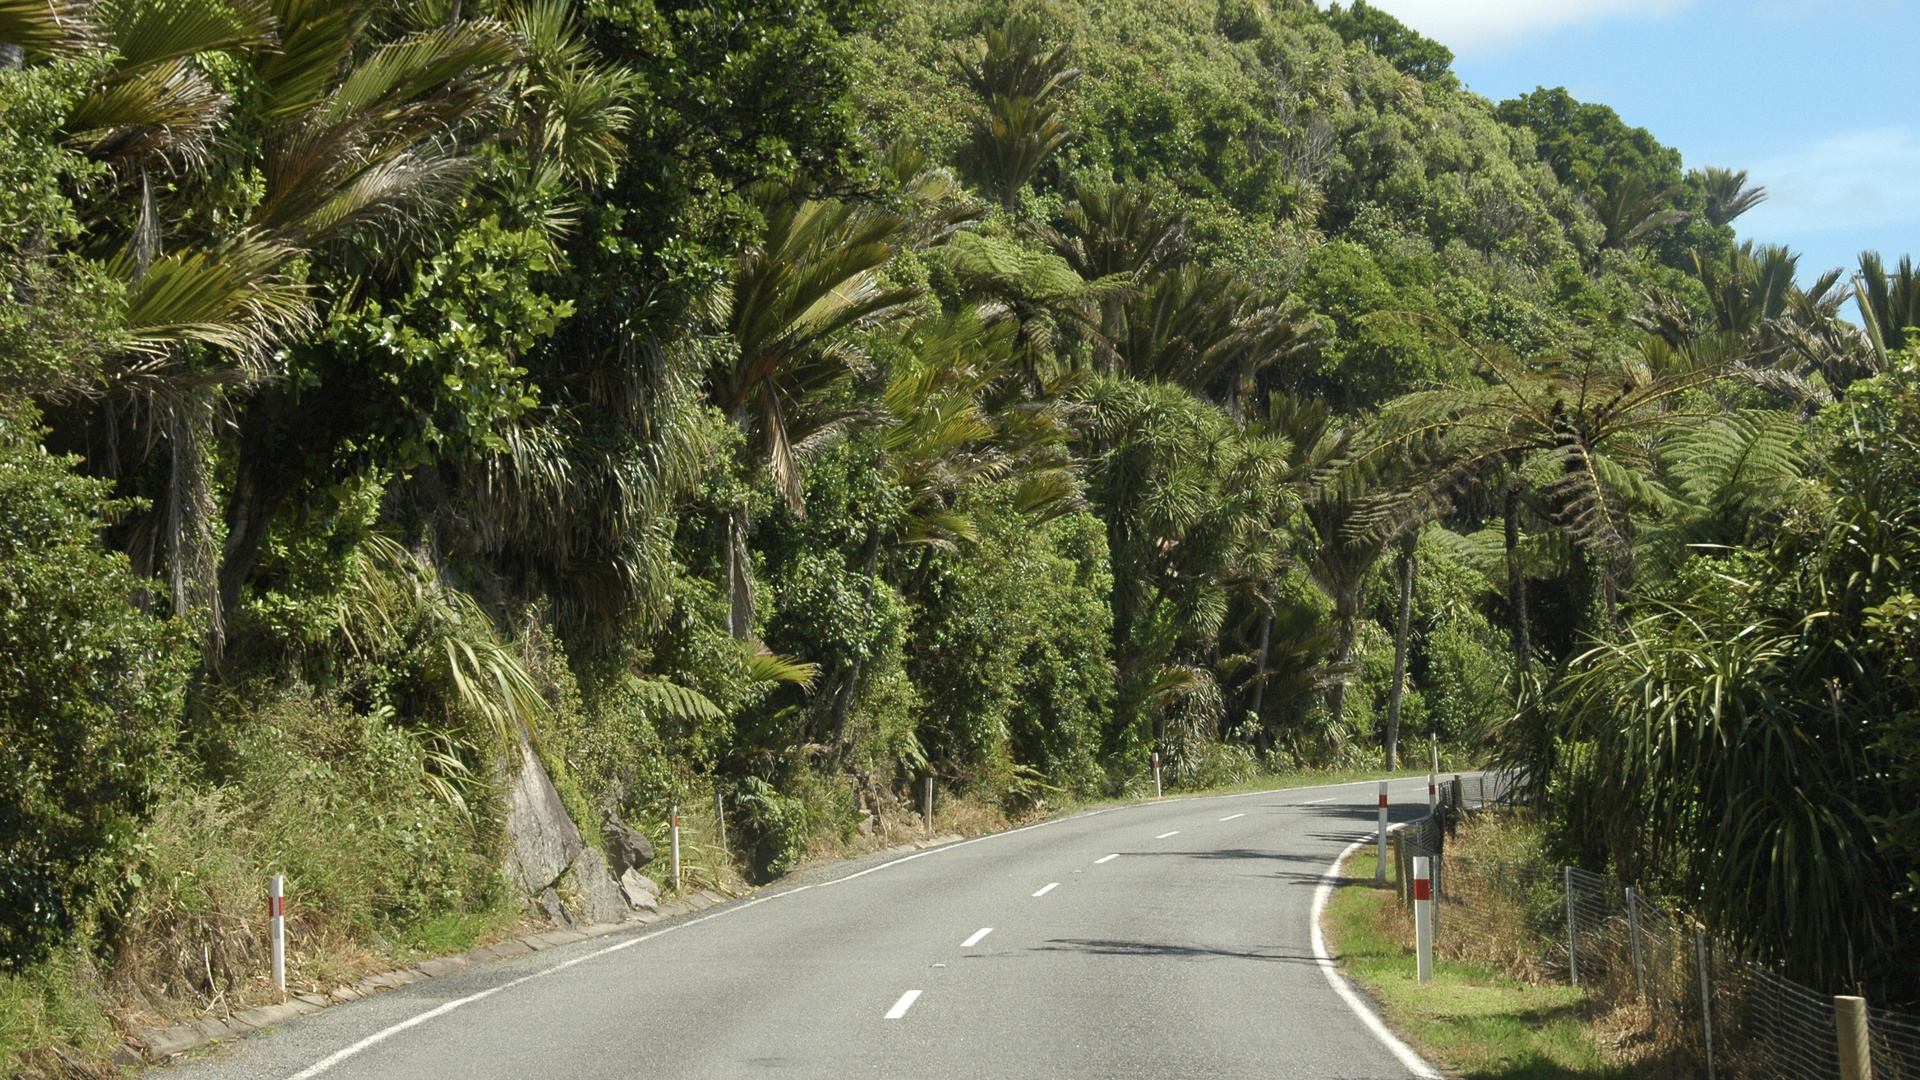 Neuseeland (2015), On the Road IV